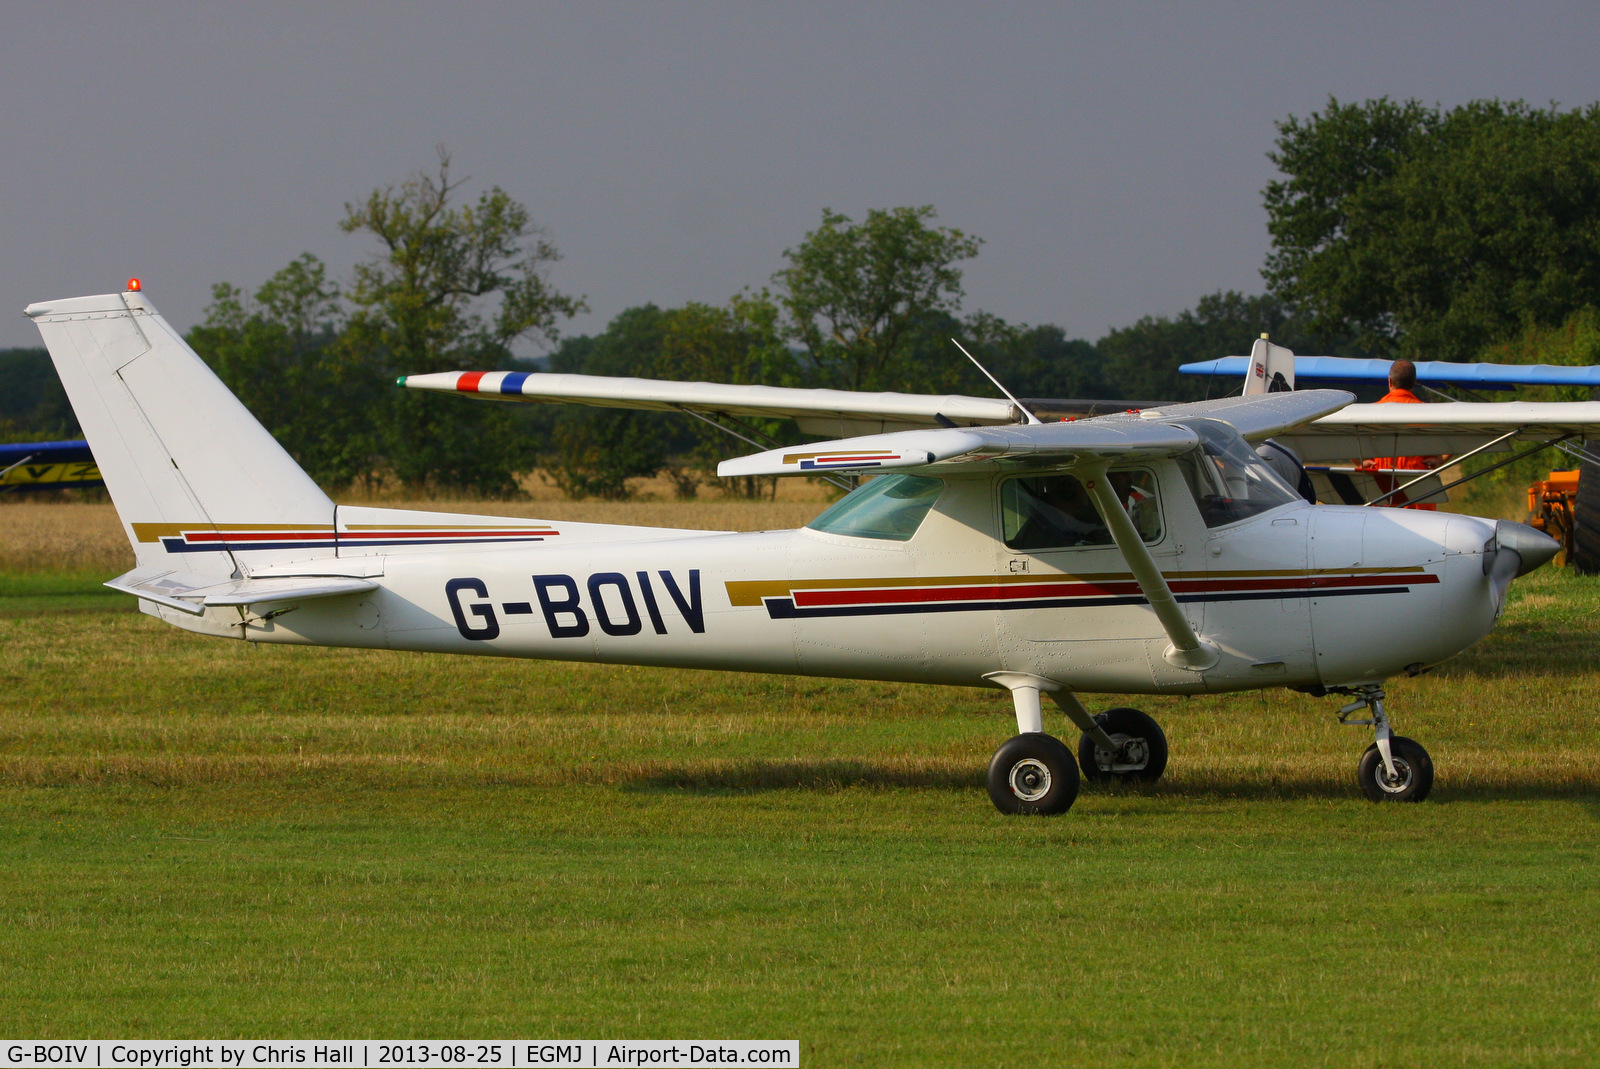 G-BOIV, 1976 Cessna 150M C/N 150-78620, at the Little Gransden Air & Vintage Vehicle Show